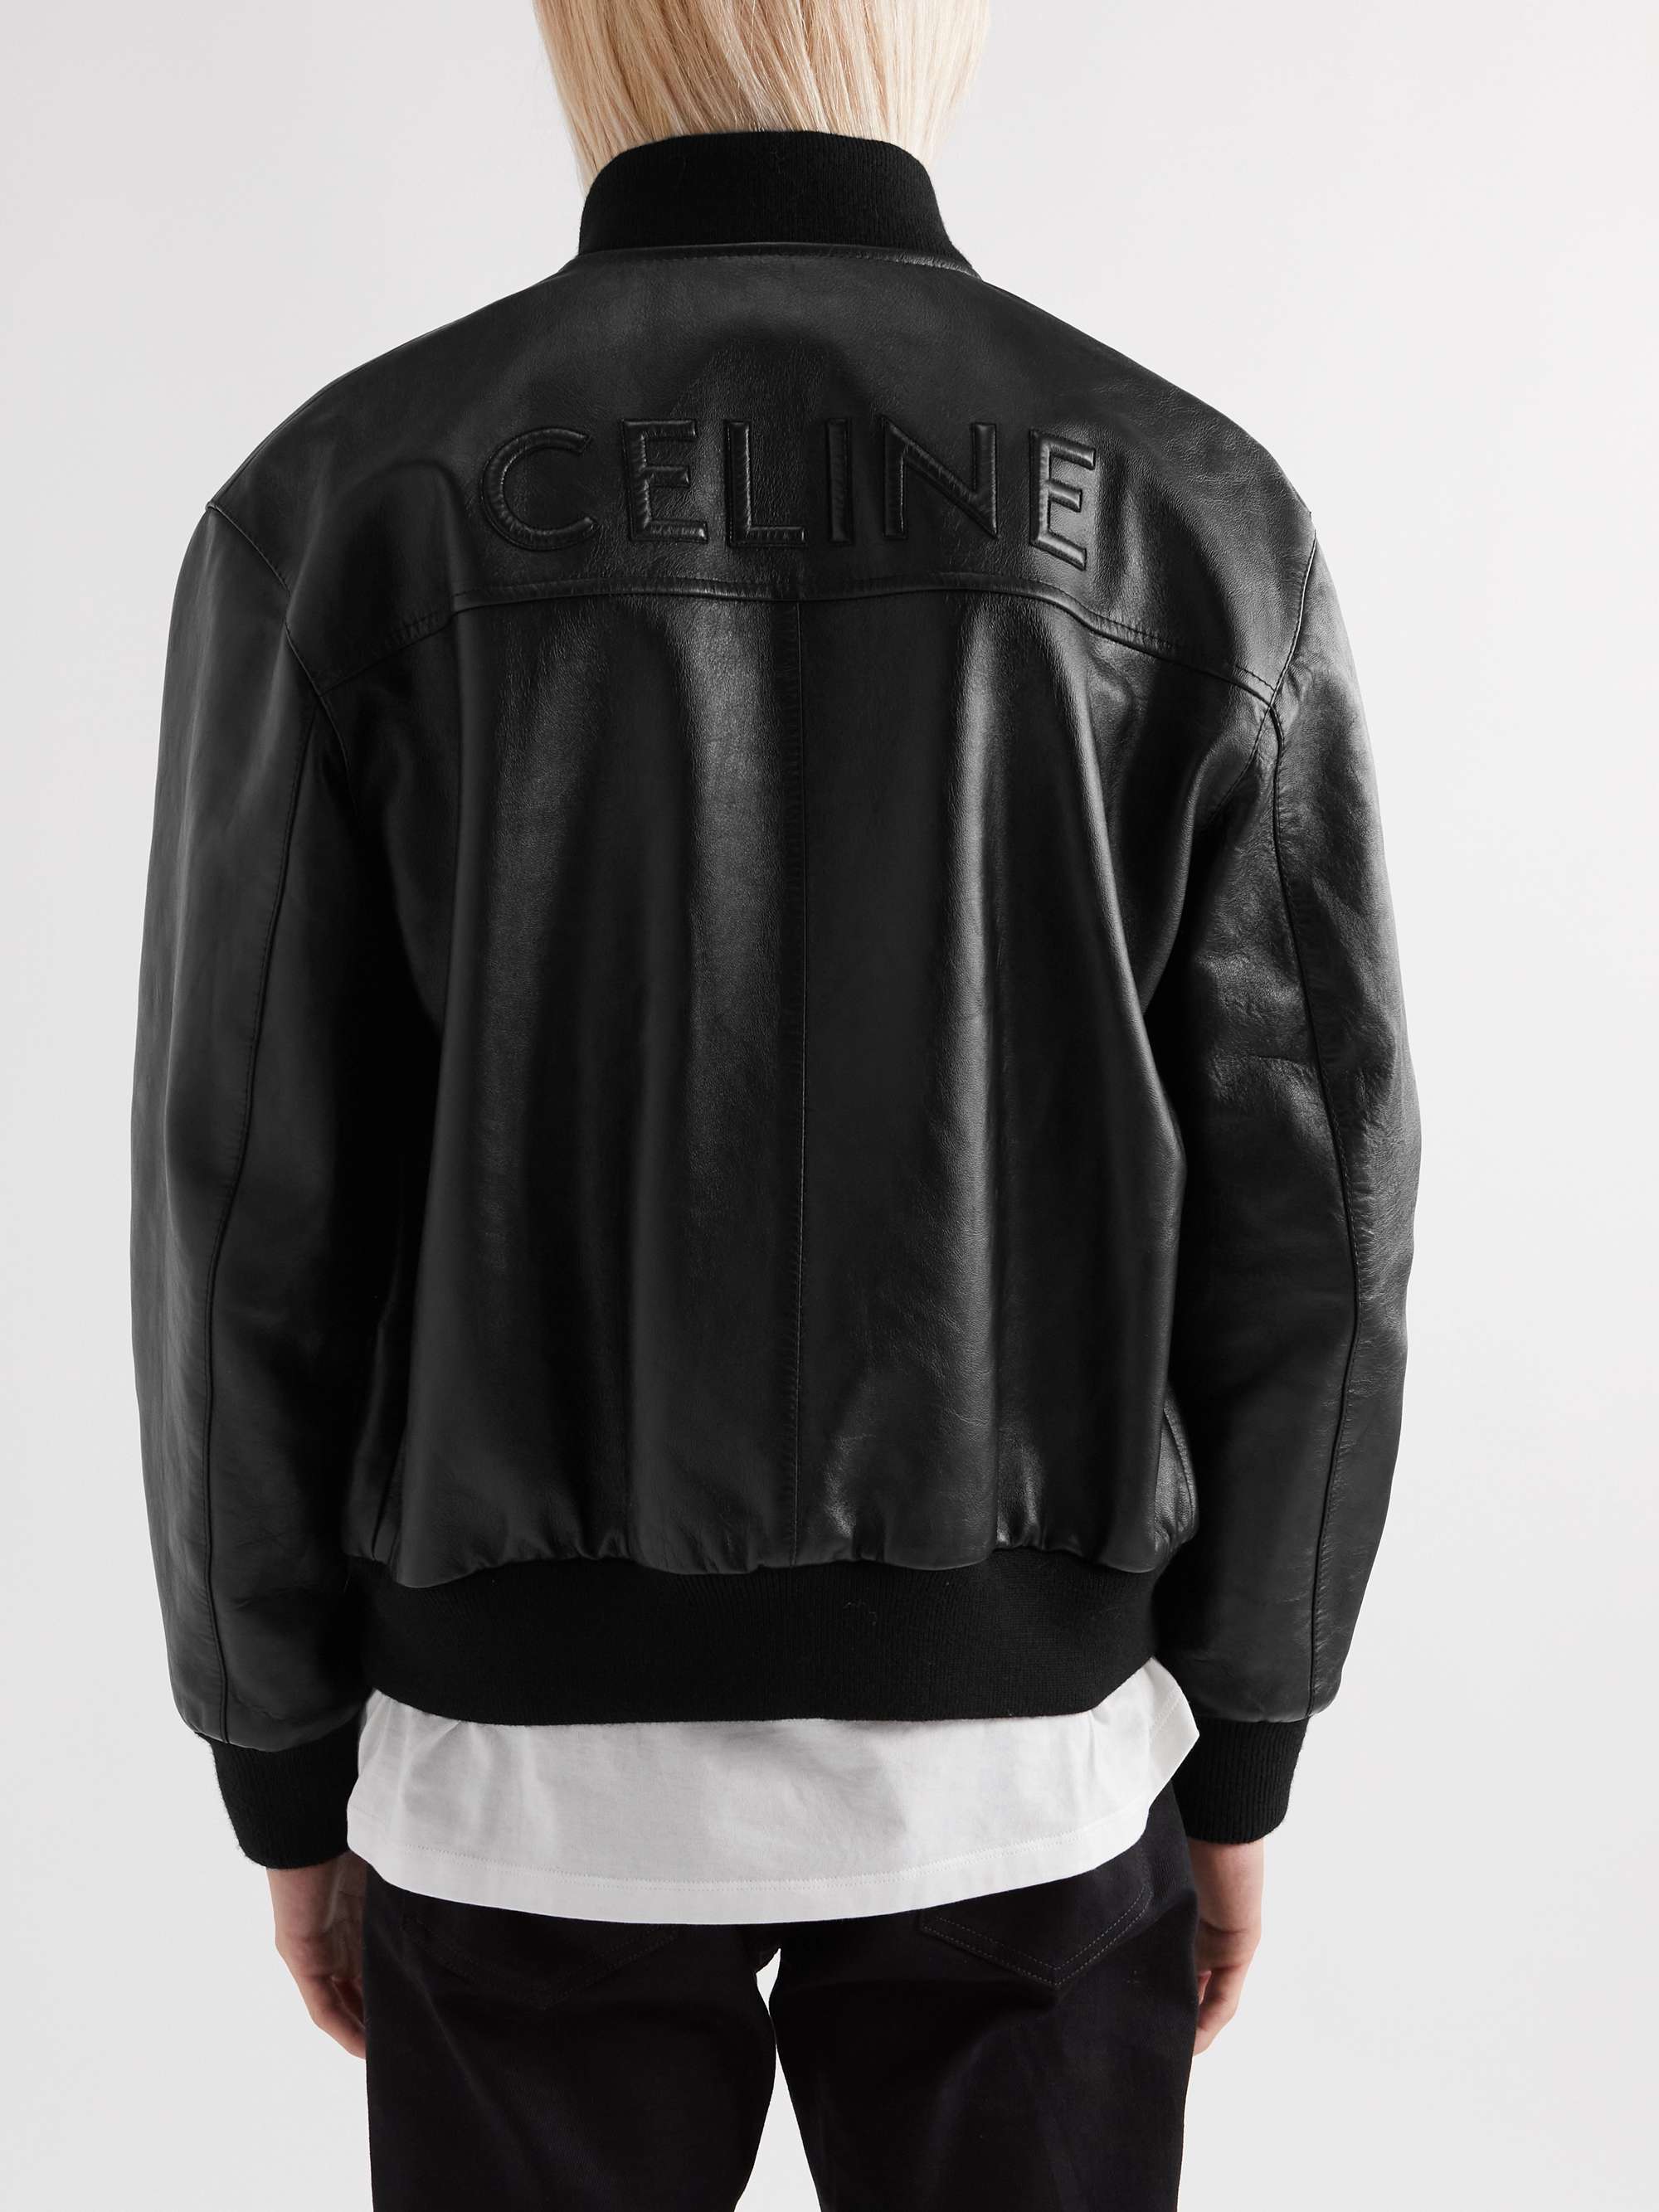 CELINE HOMME Logo-Embossed Leather Bomber Jacket